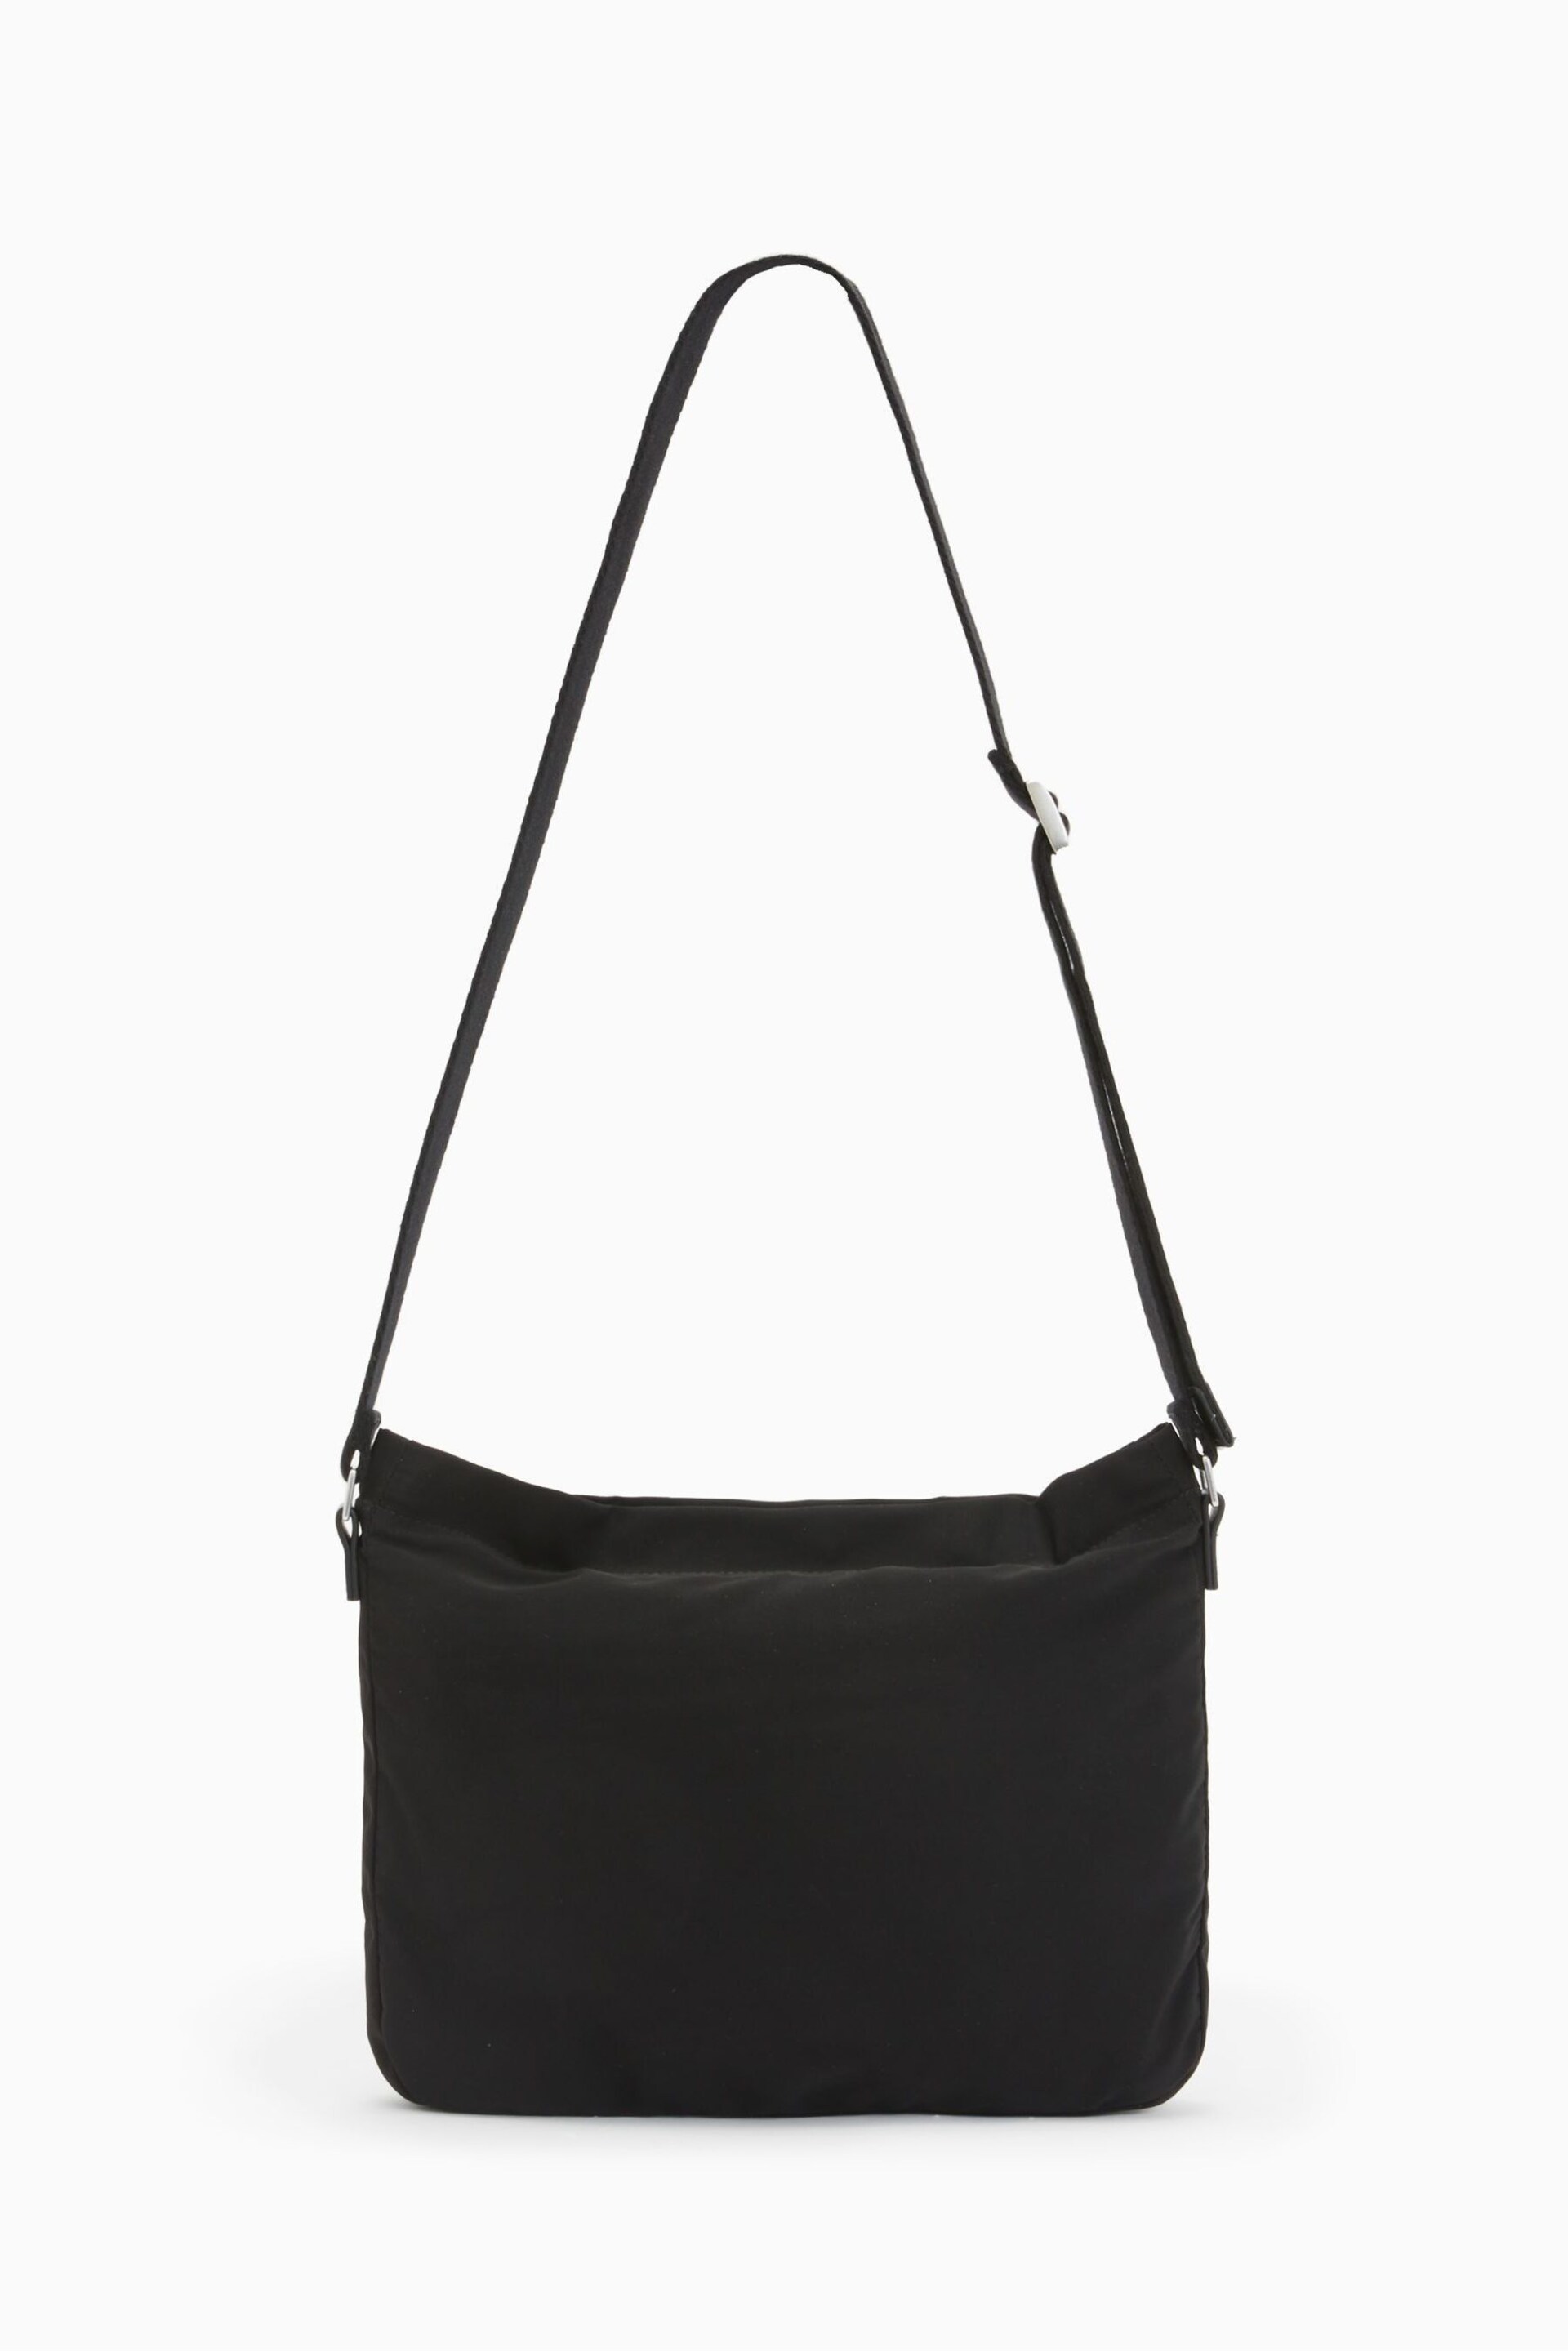 AllSaints Black Ader Cross-Body Bag - Image 3 of 7